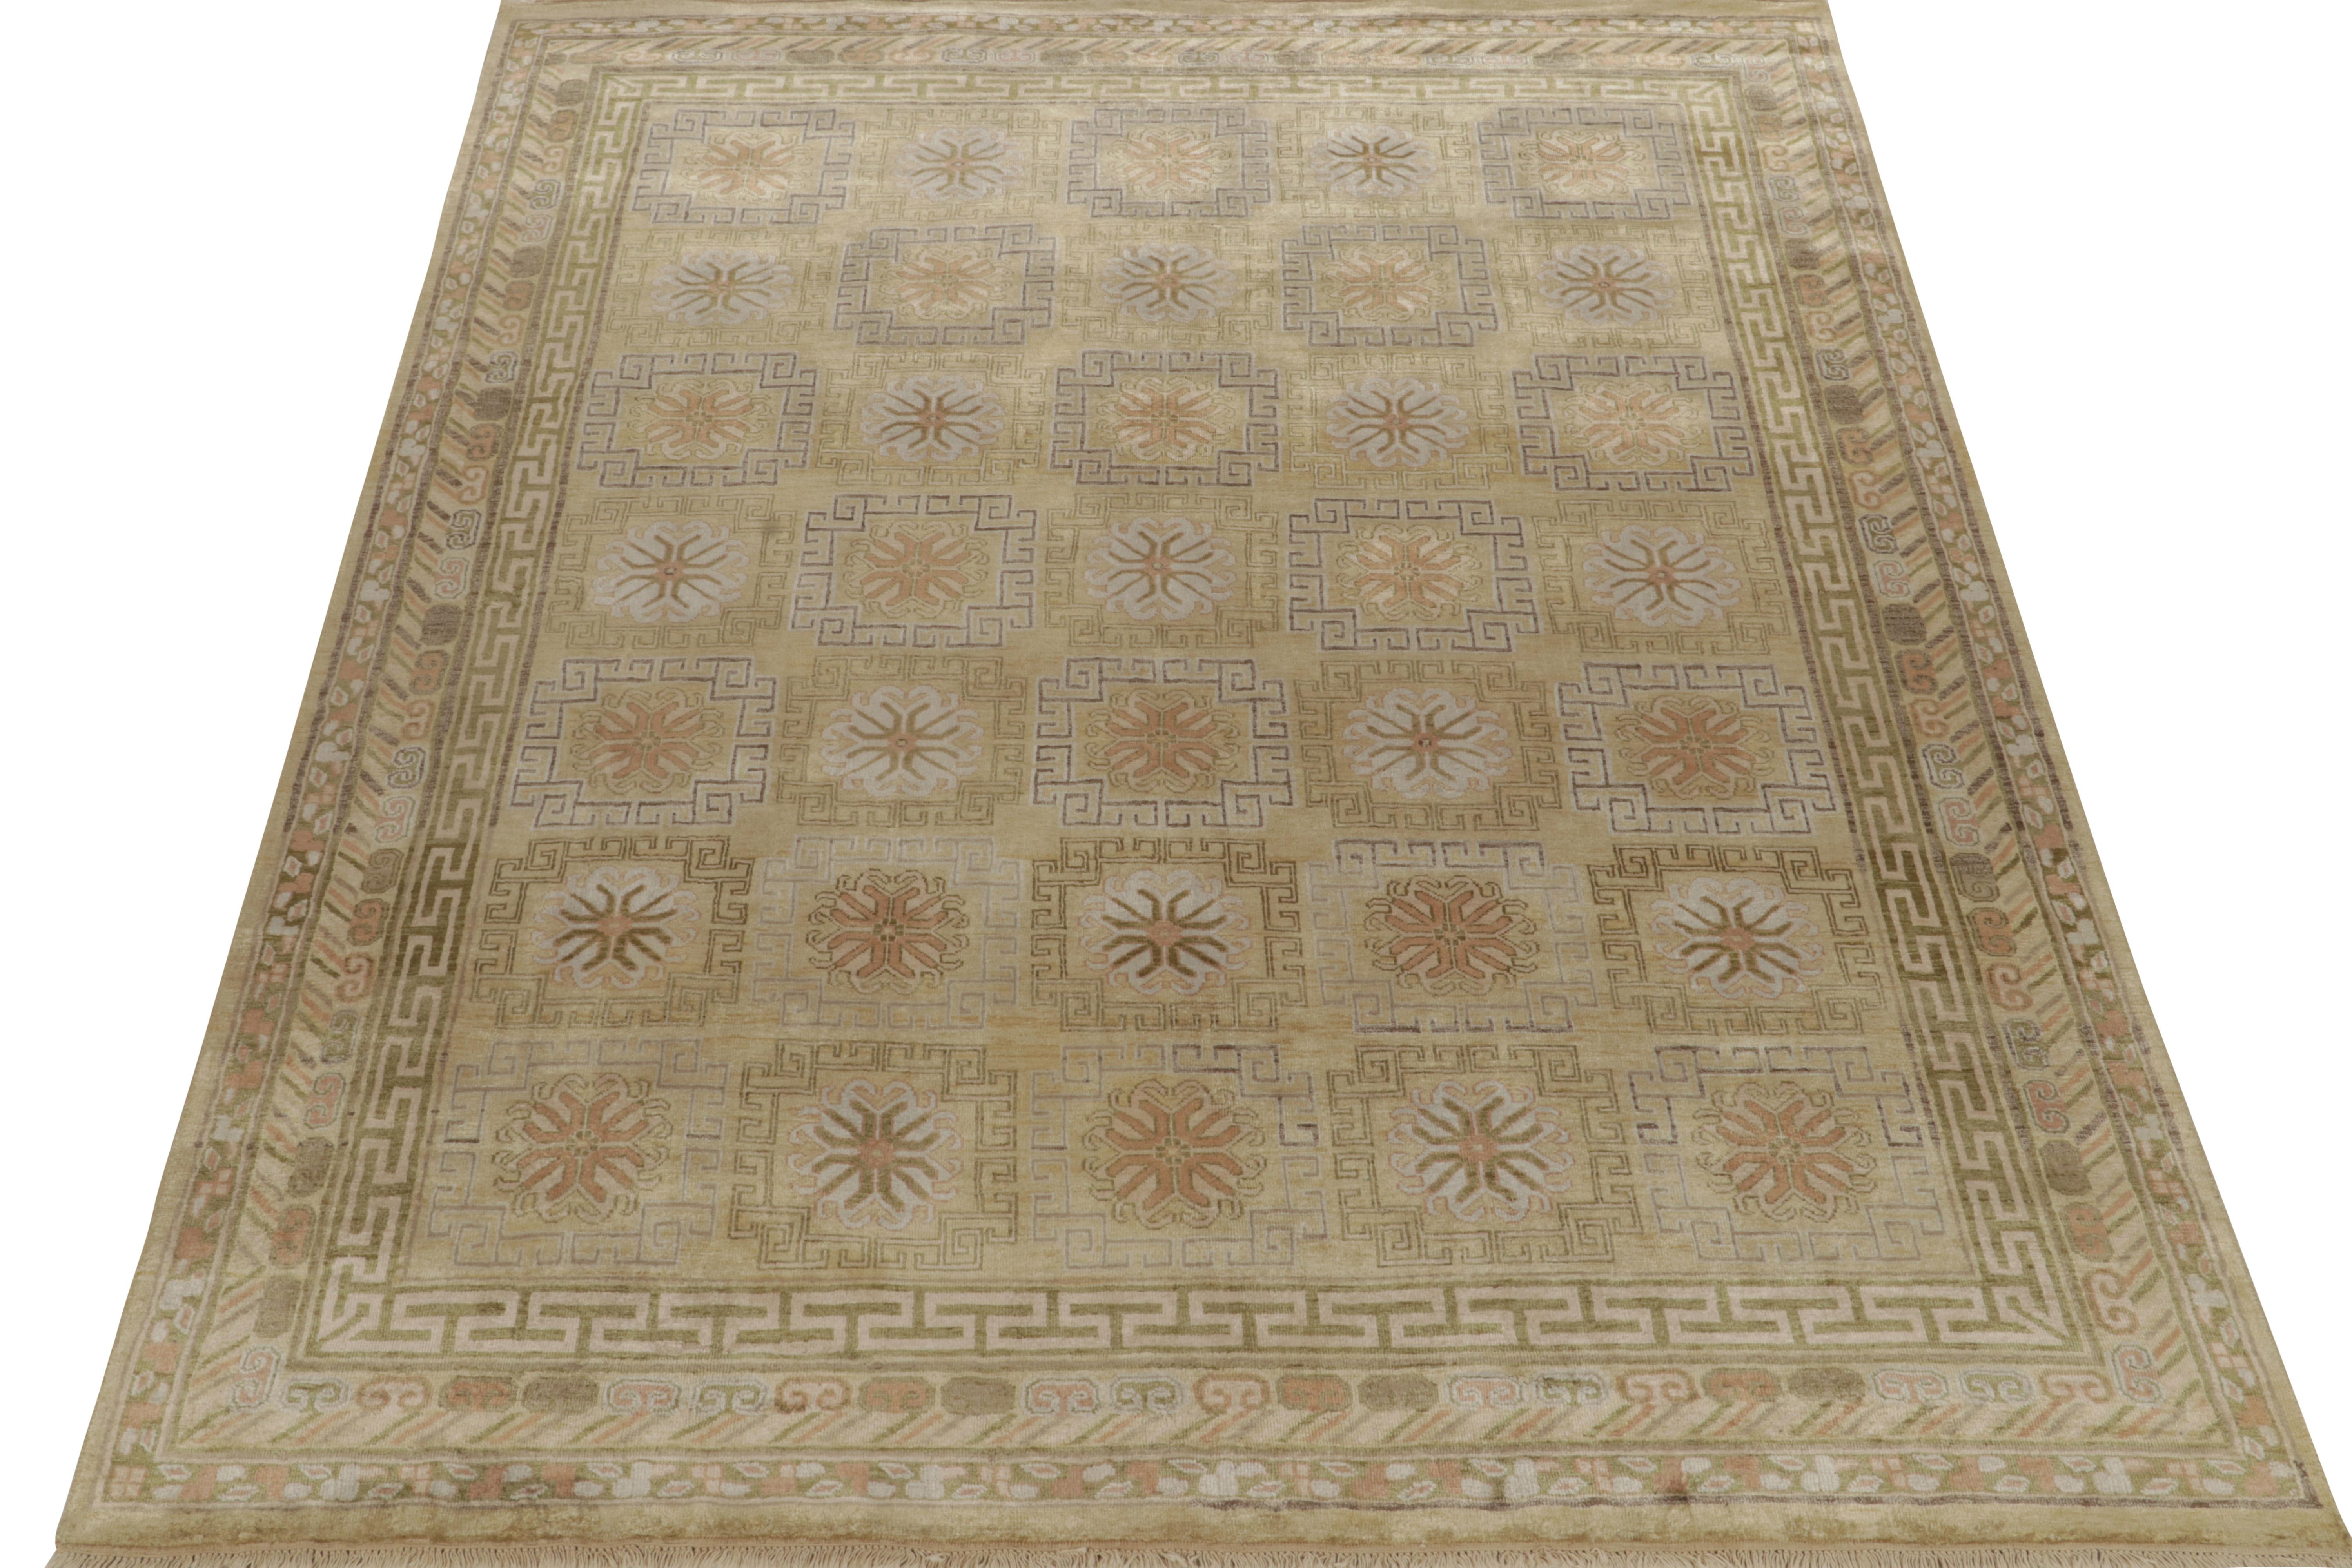 Indian Rug & Kilim’s Antique Khotan style rug in Gold & Beige-Brown Geometric Patterns For Sale